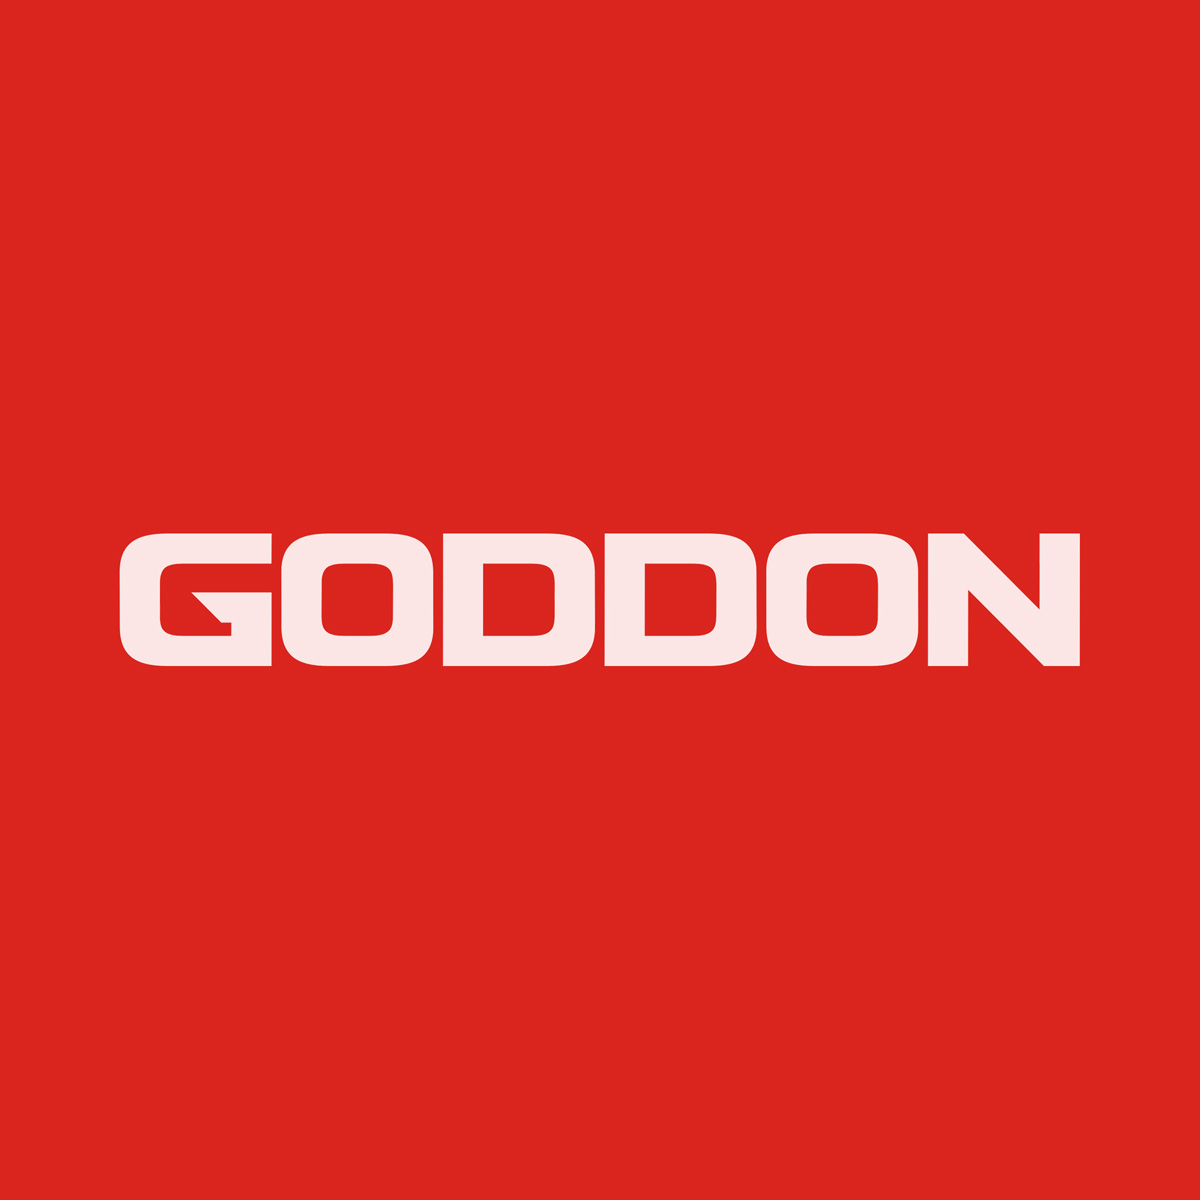 Yiwu Goddon Vision Technology Co., Ltd. logo